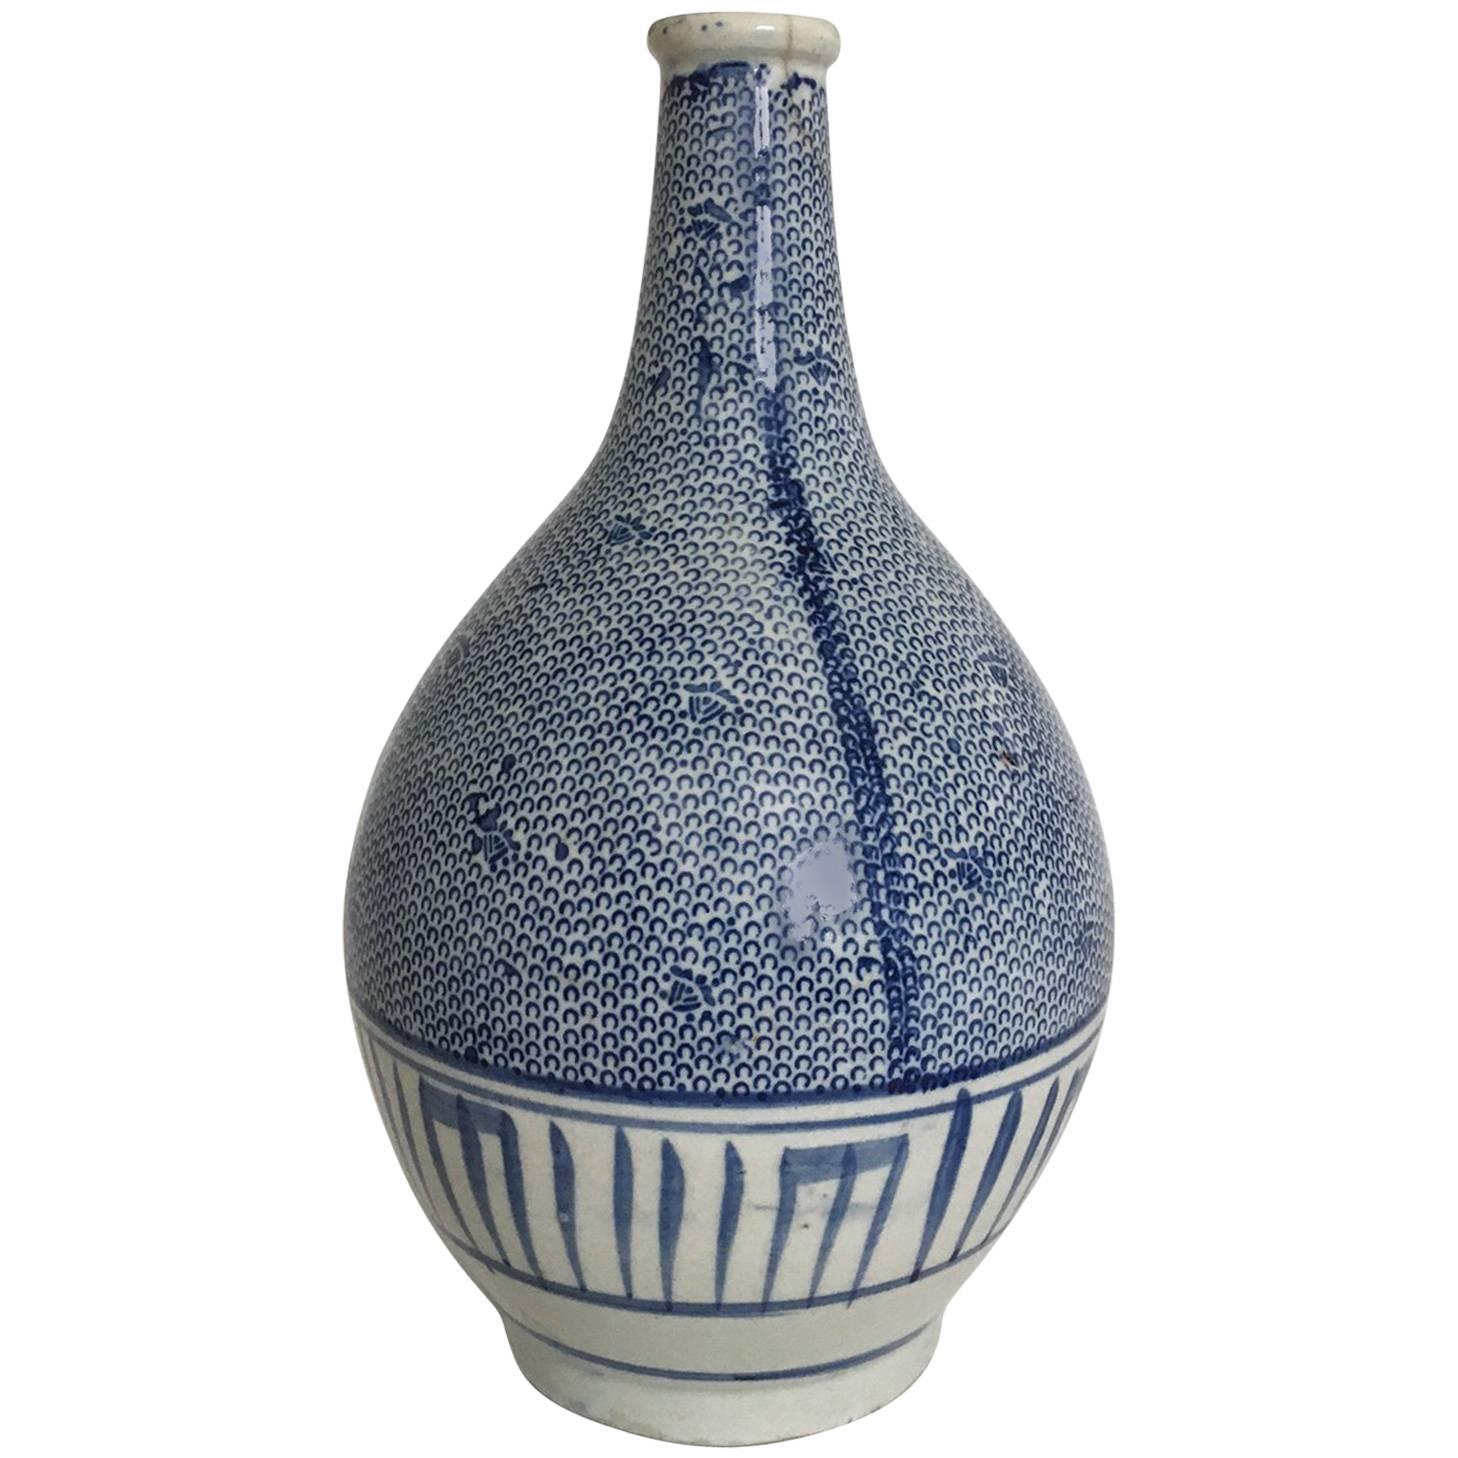 19th Century Antique Cobalt Blue and White Japanese Sake Bottle